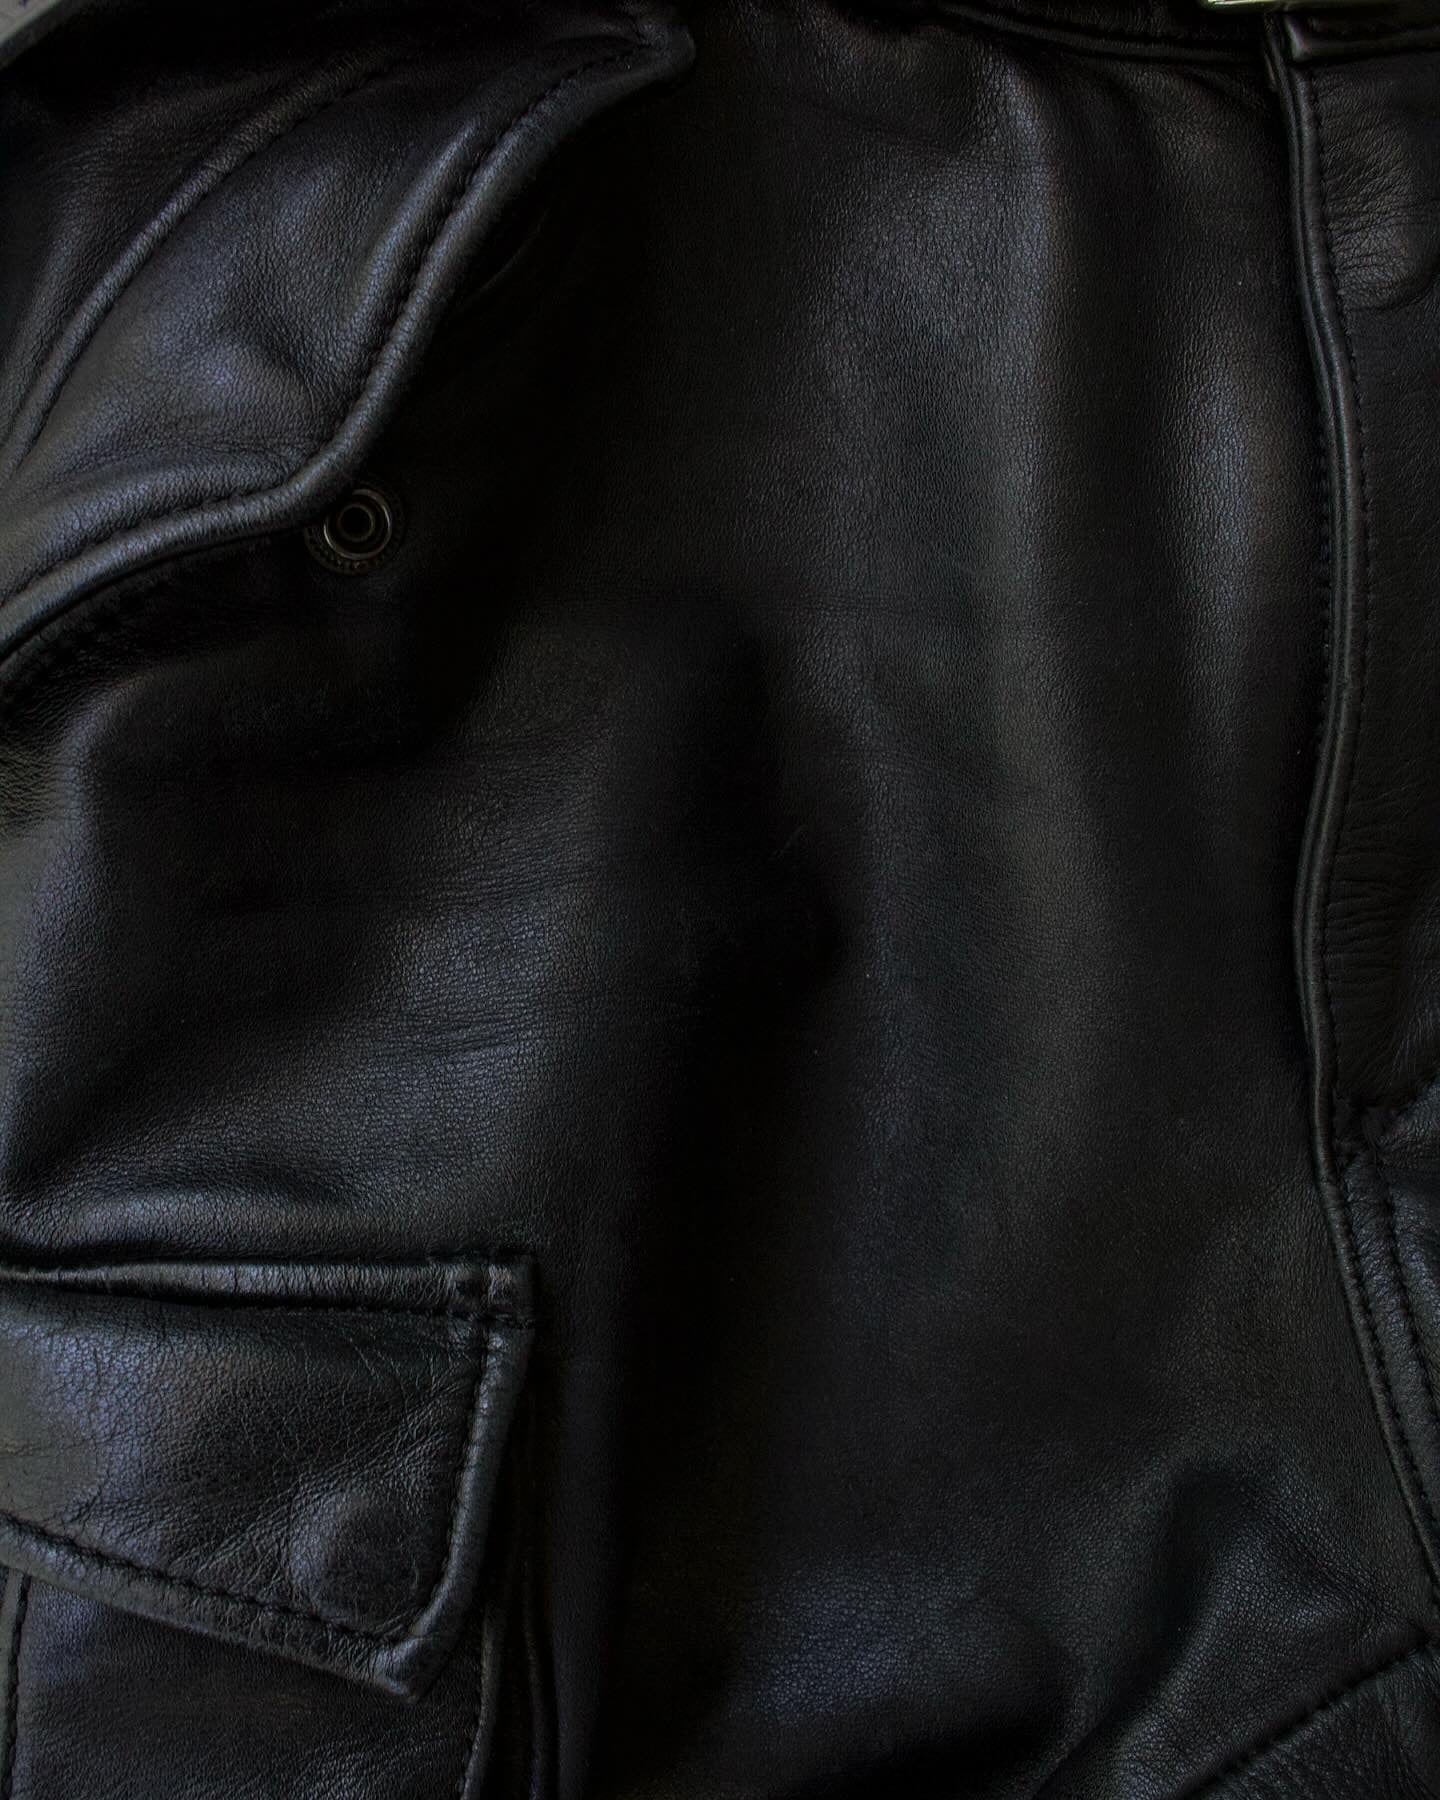 Kadoya K’s Leather 00s Cowhide Leather Wide Cut Motorcycle Cargo Pants